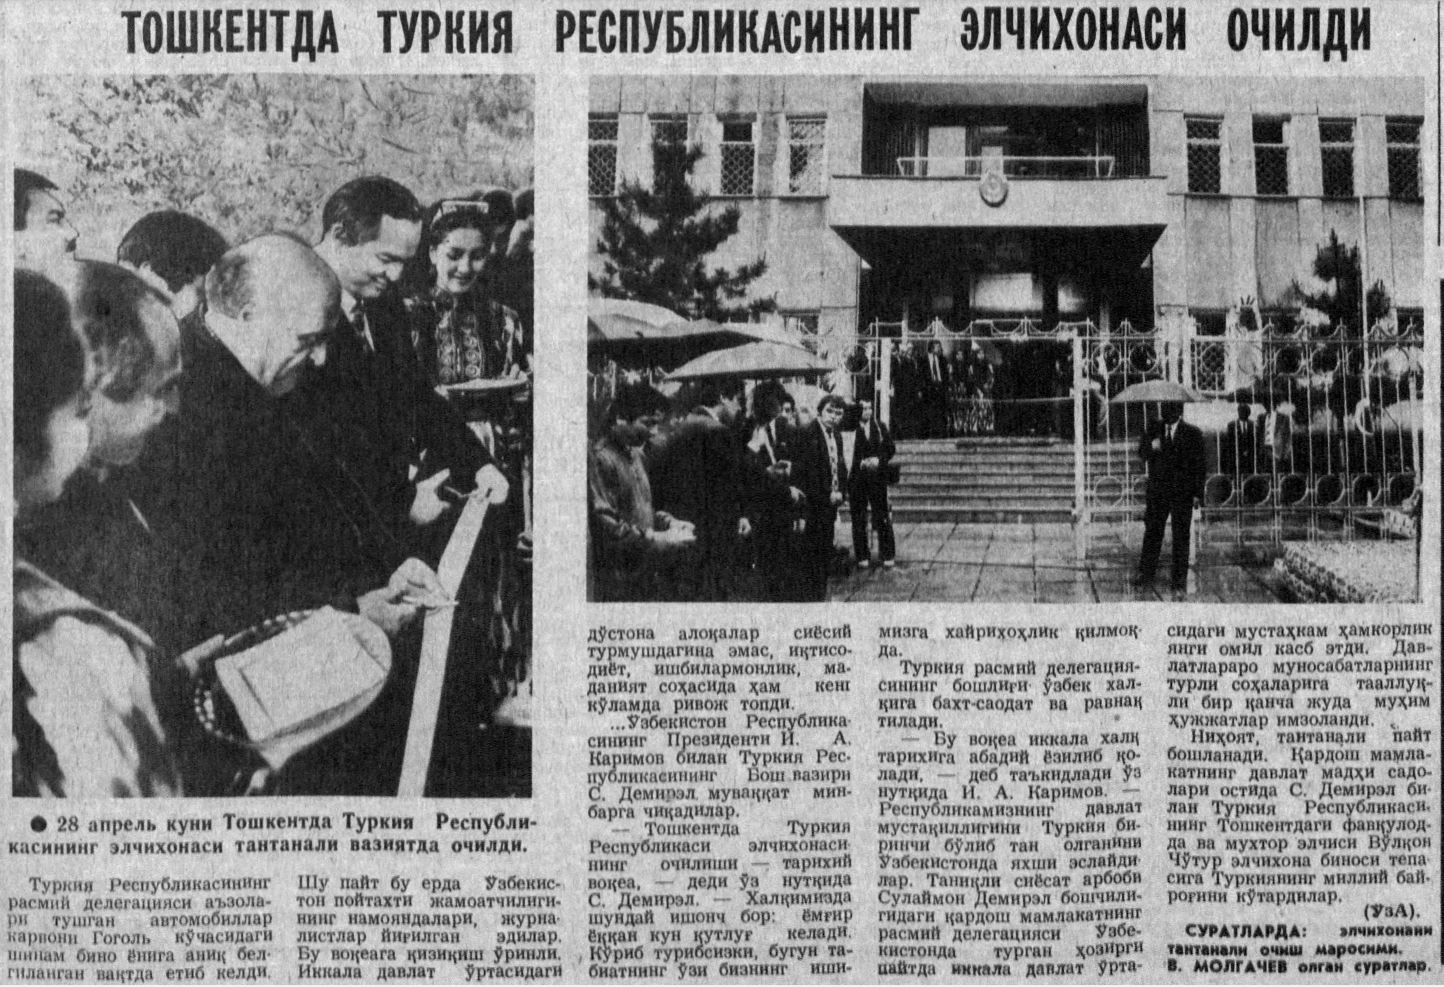 «Ўзбекистон овози» газетасининг 1992 йил 29 апрель сонидан лавҳа